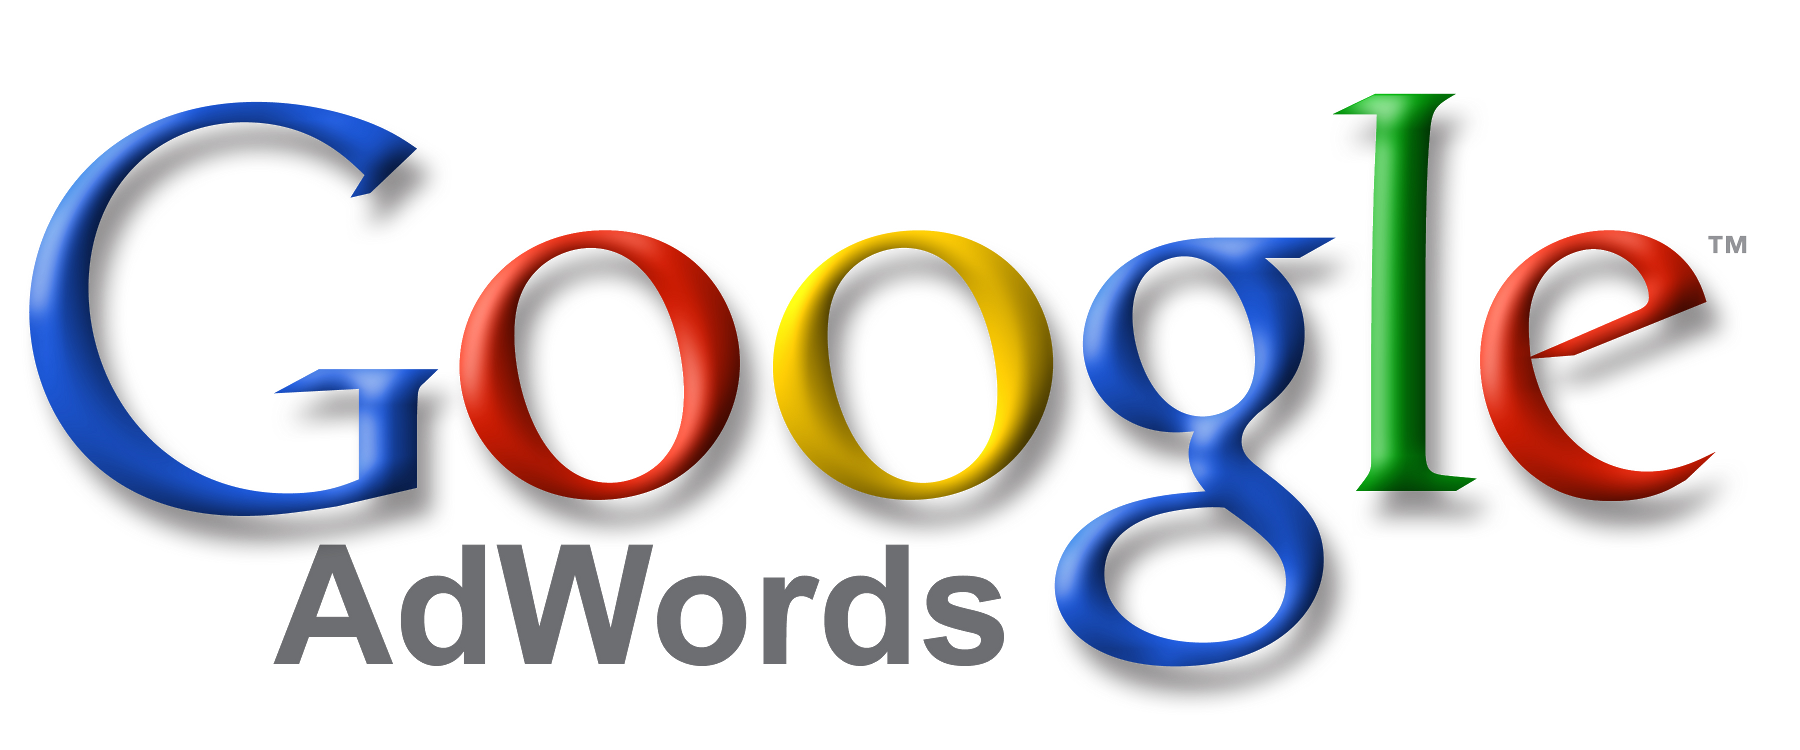 Logo-google-adwords